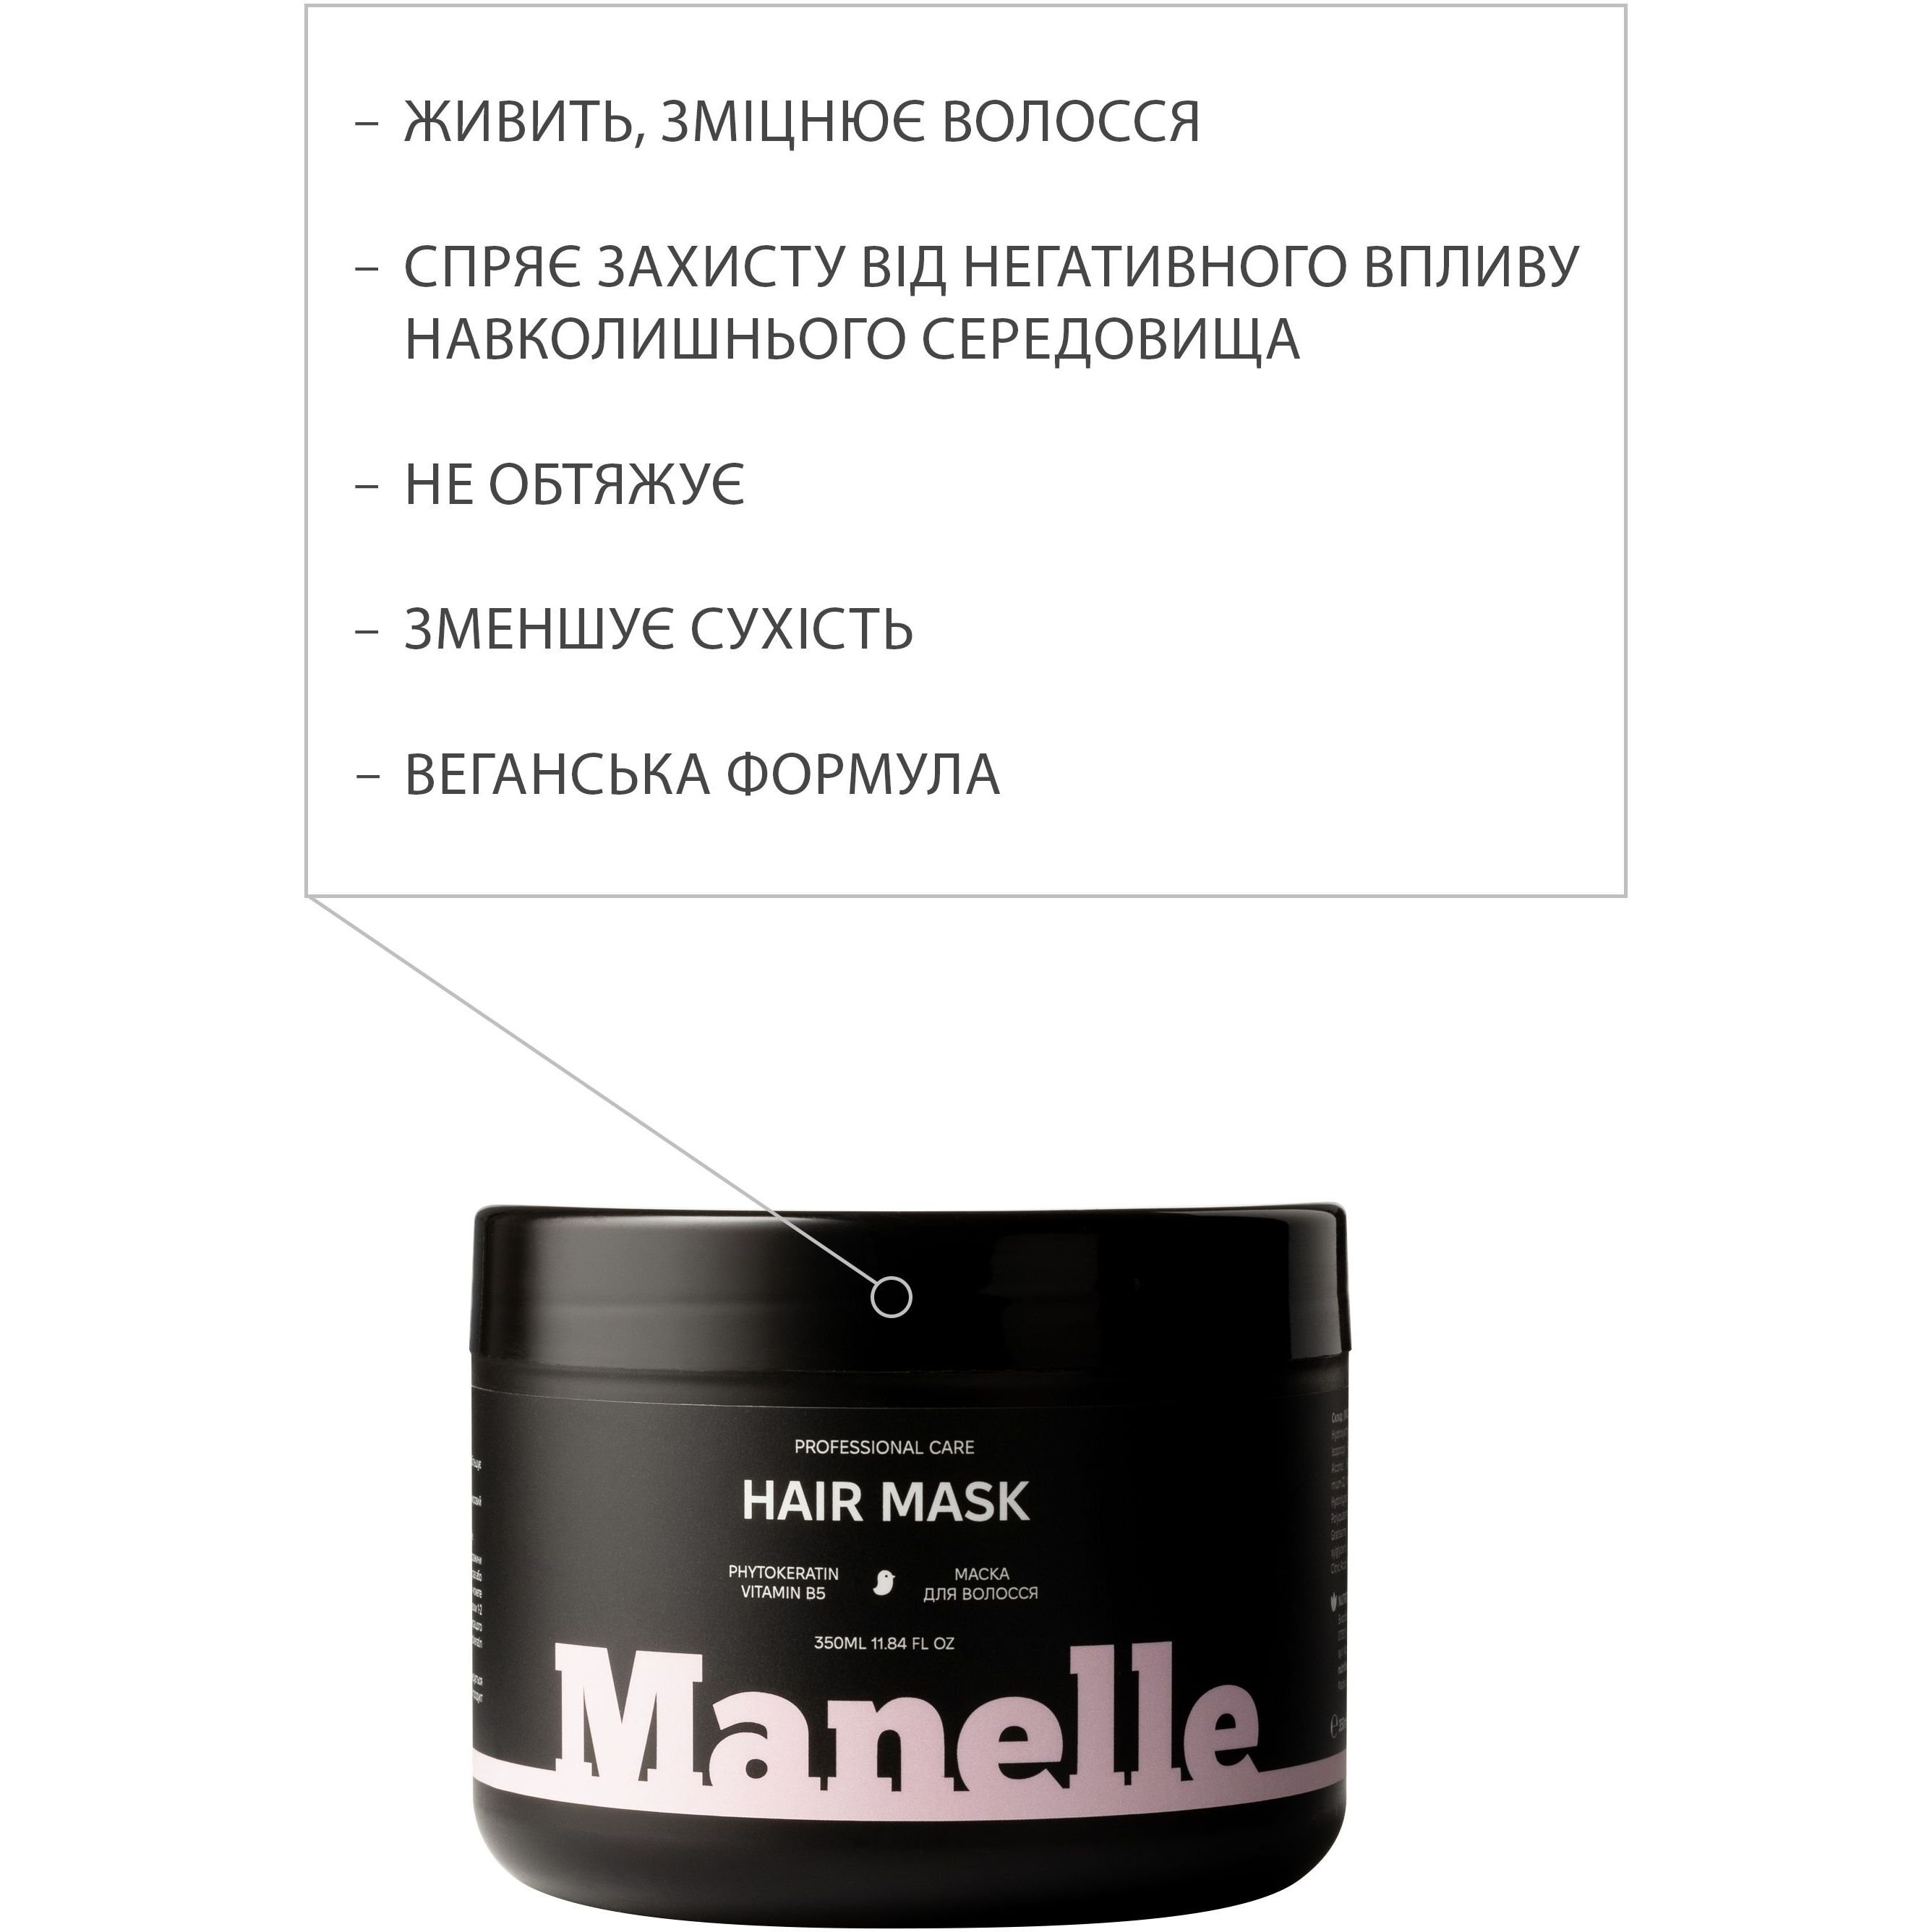 Маска для волосся Manelle Рrofessional care Phytokeratin vitamin B5 350 мл - фото 2